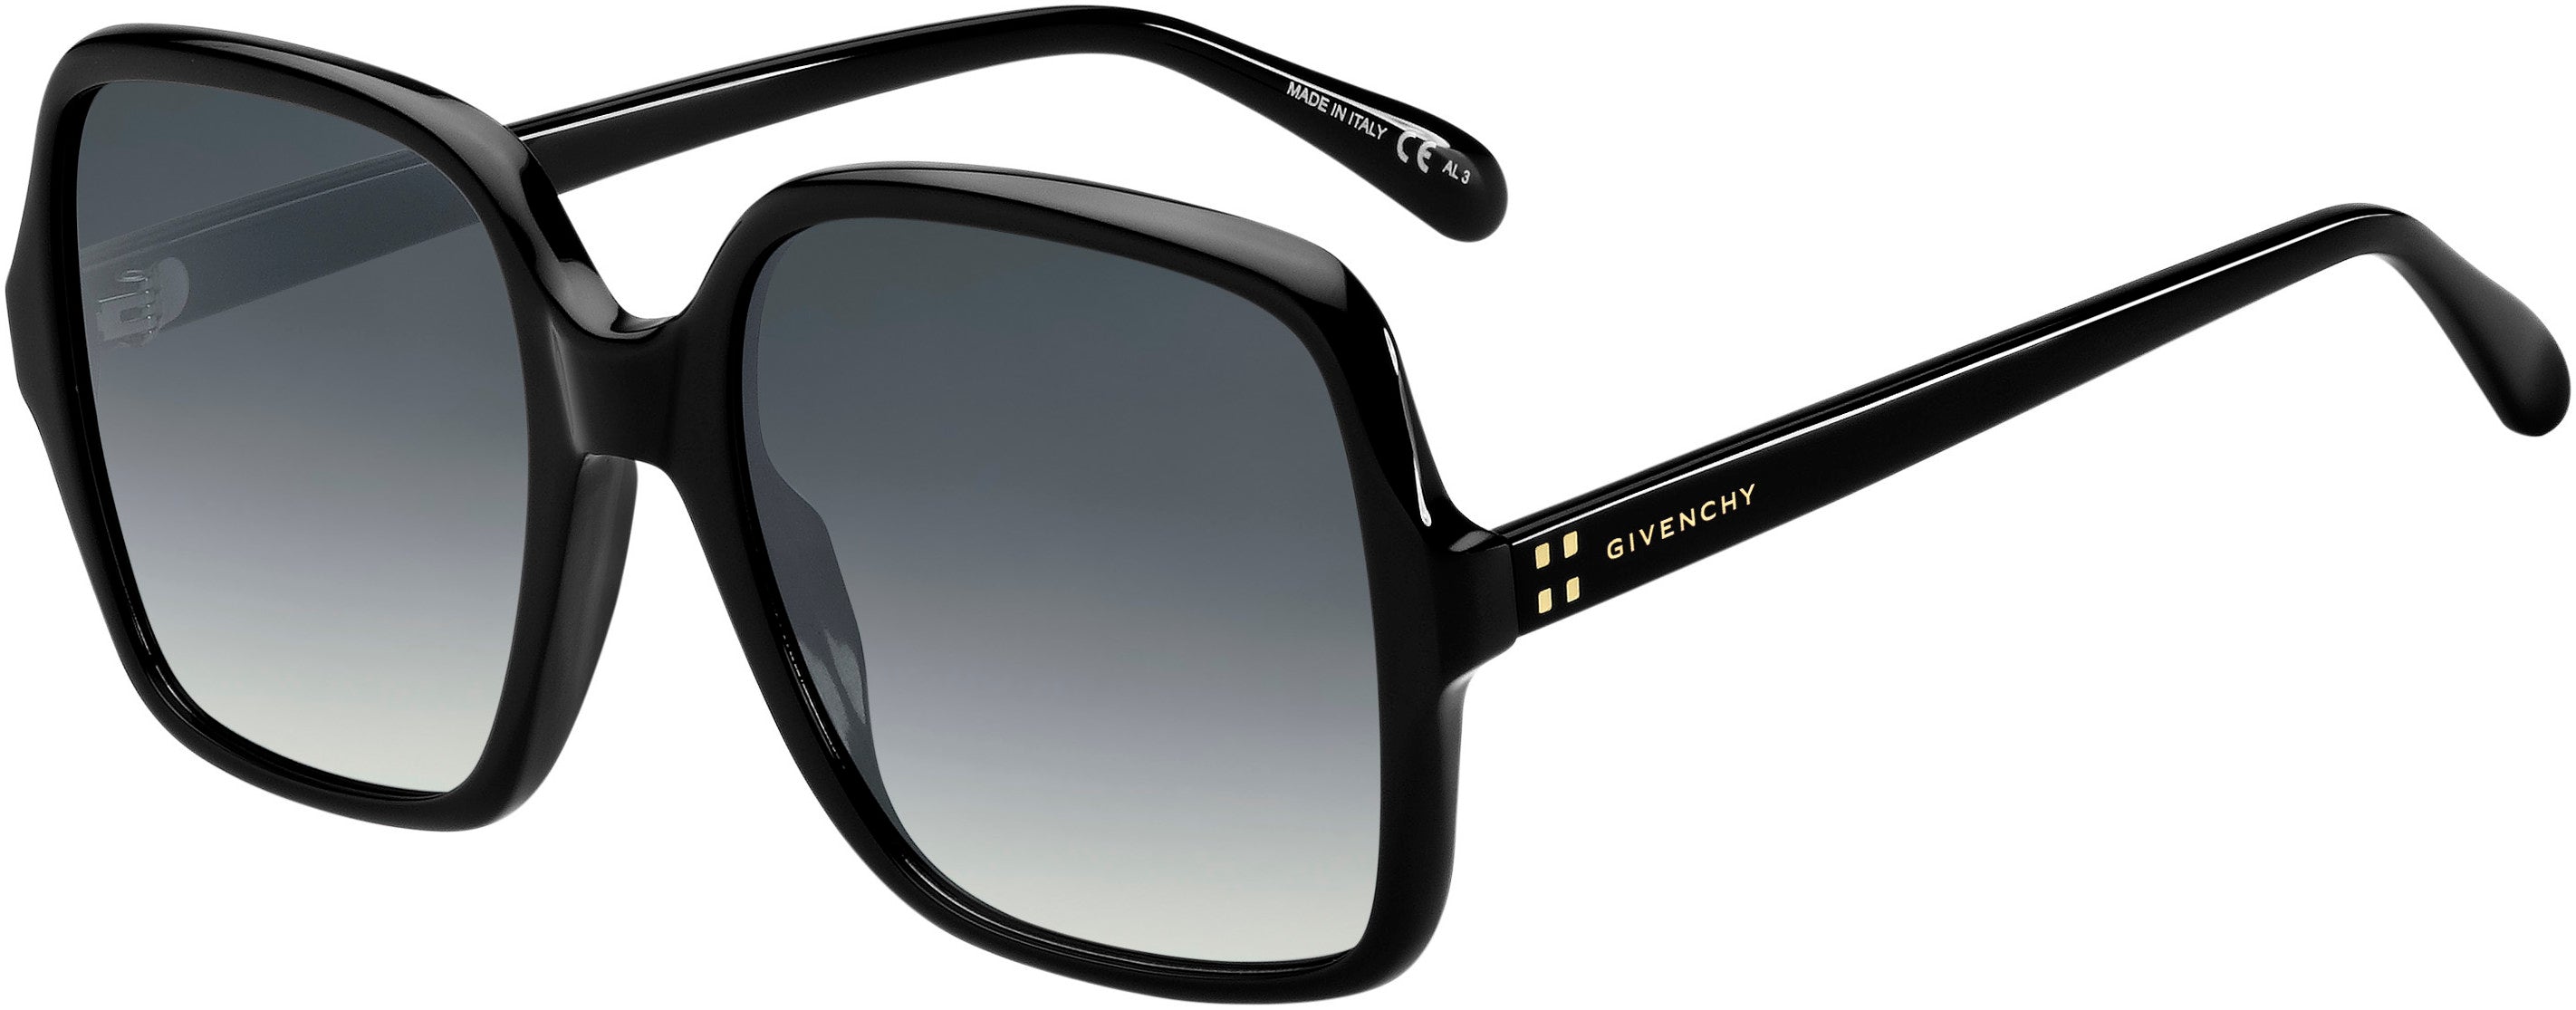  Givenchy 7123/G/S Square Sunglasses 0807-0807  Black (9O Dark Gray Gradient)